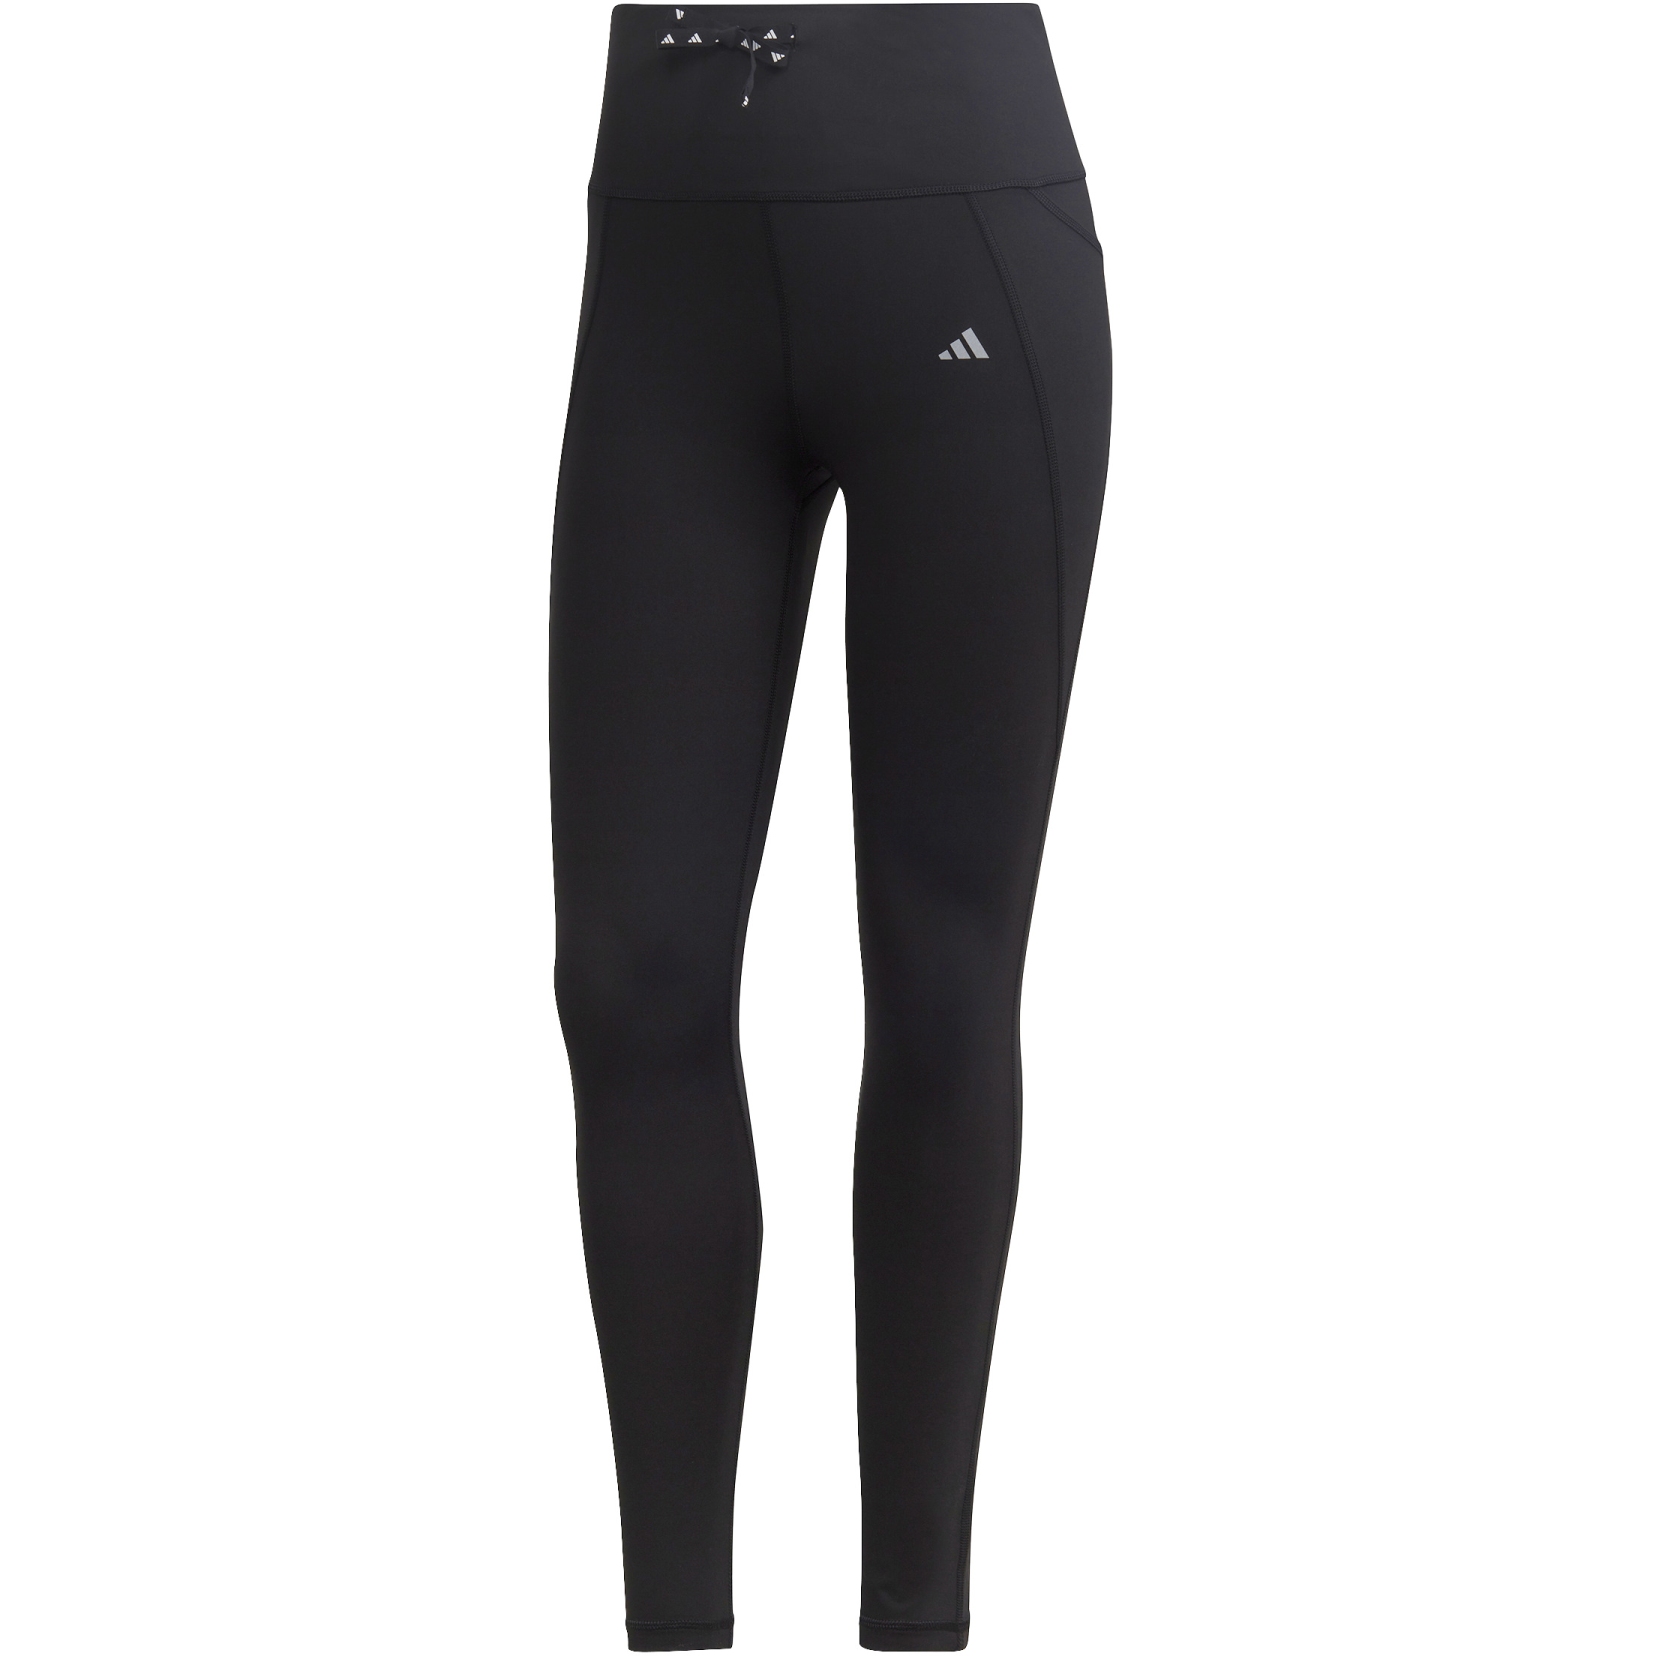 https://images.bike24.com/i/mb/69/bd/37/adidas-womens-running-essentials-7-8-leggings-black-hs5464--6-1358848.jpg